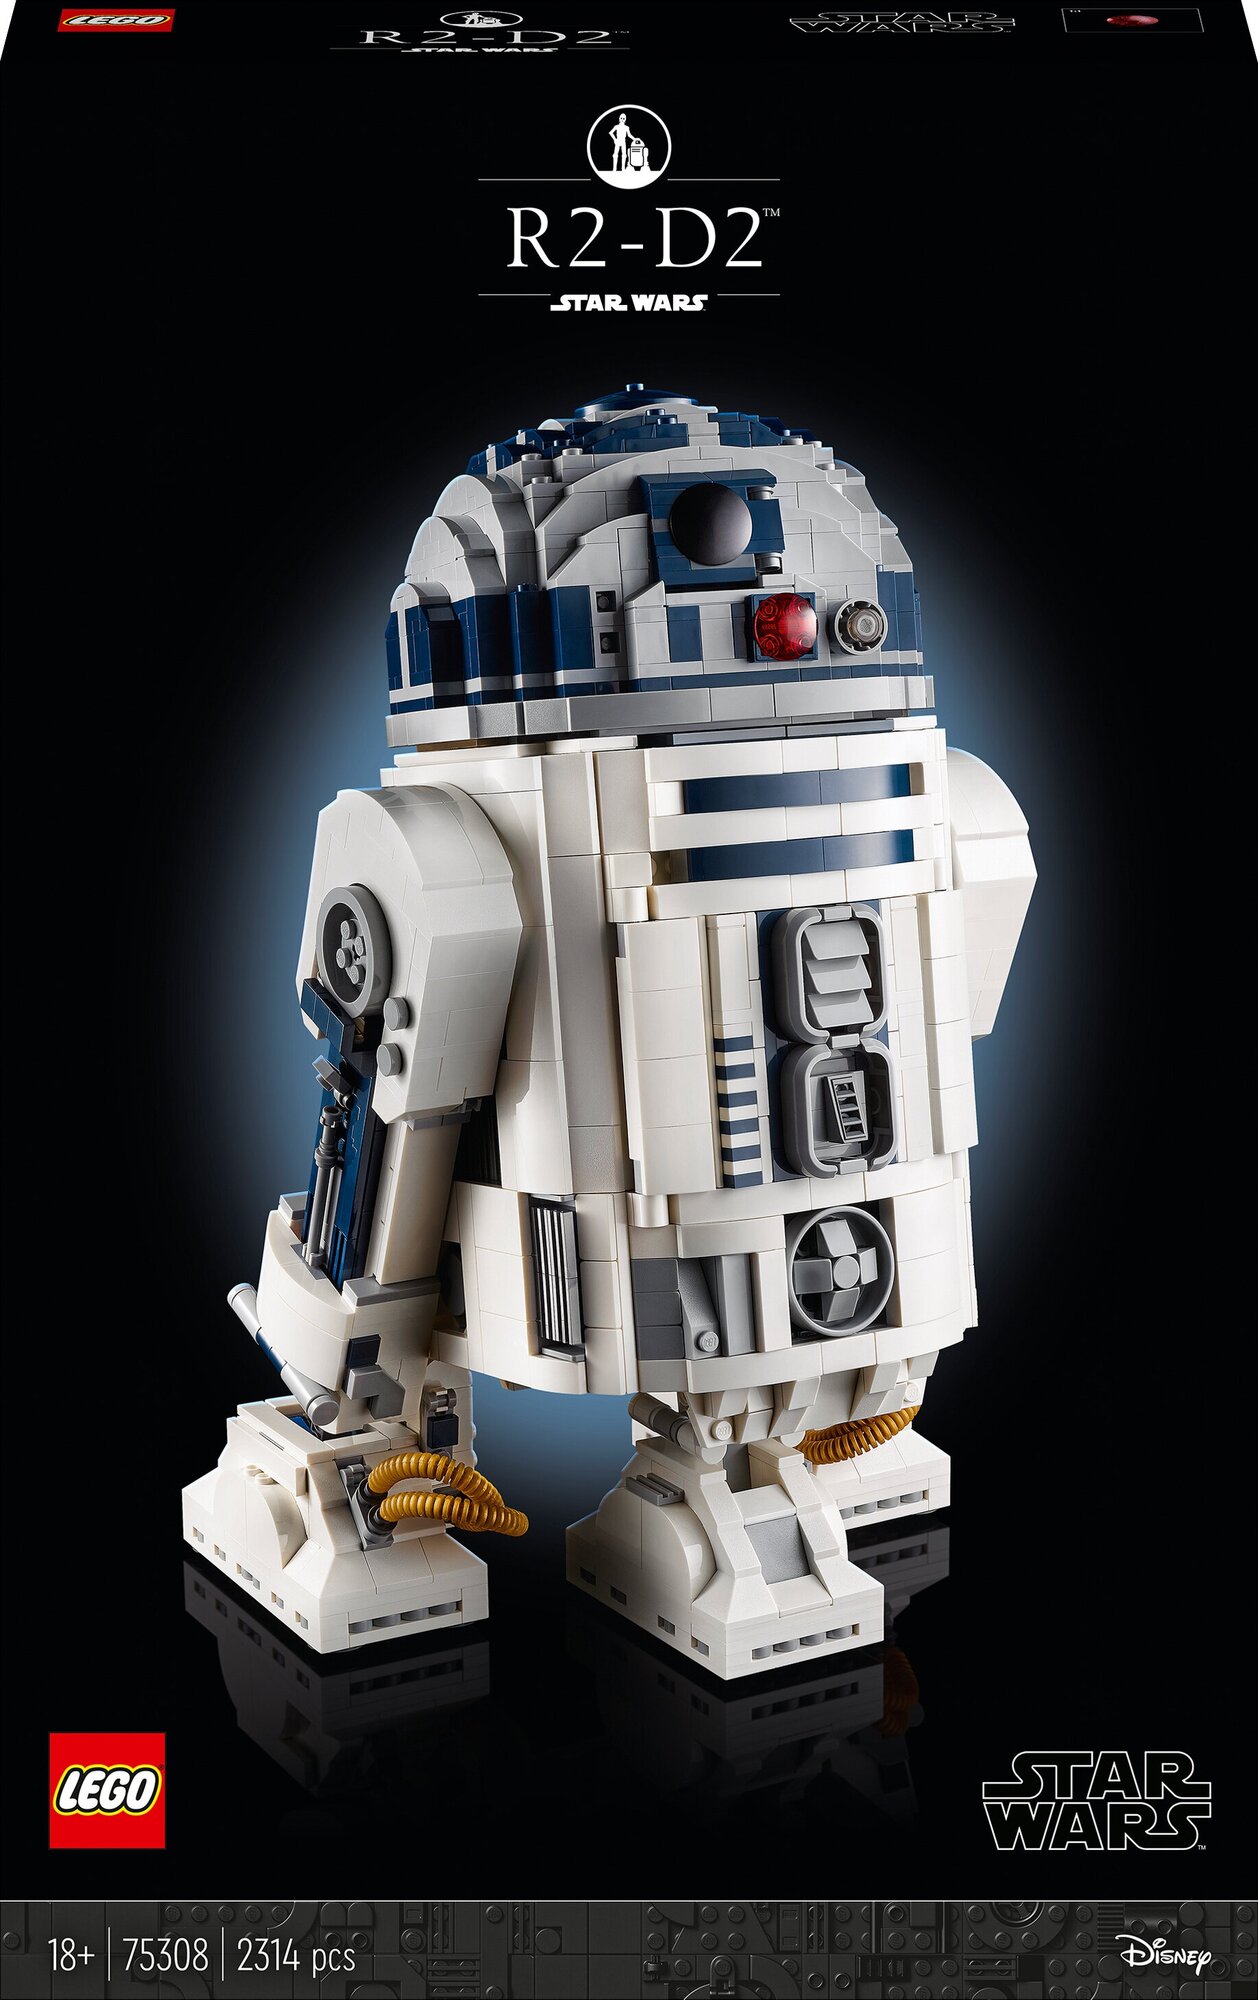 Конструктор LEGO Star Wars 75308 R2-D2, 2314 дет.